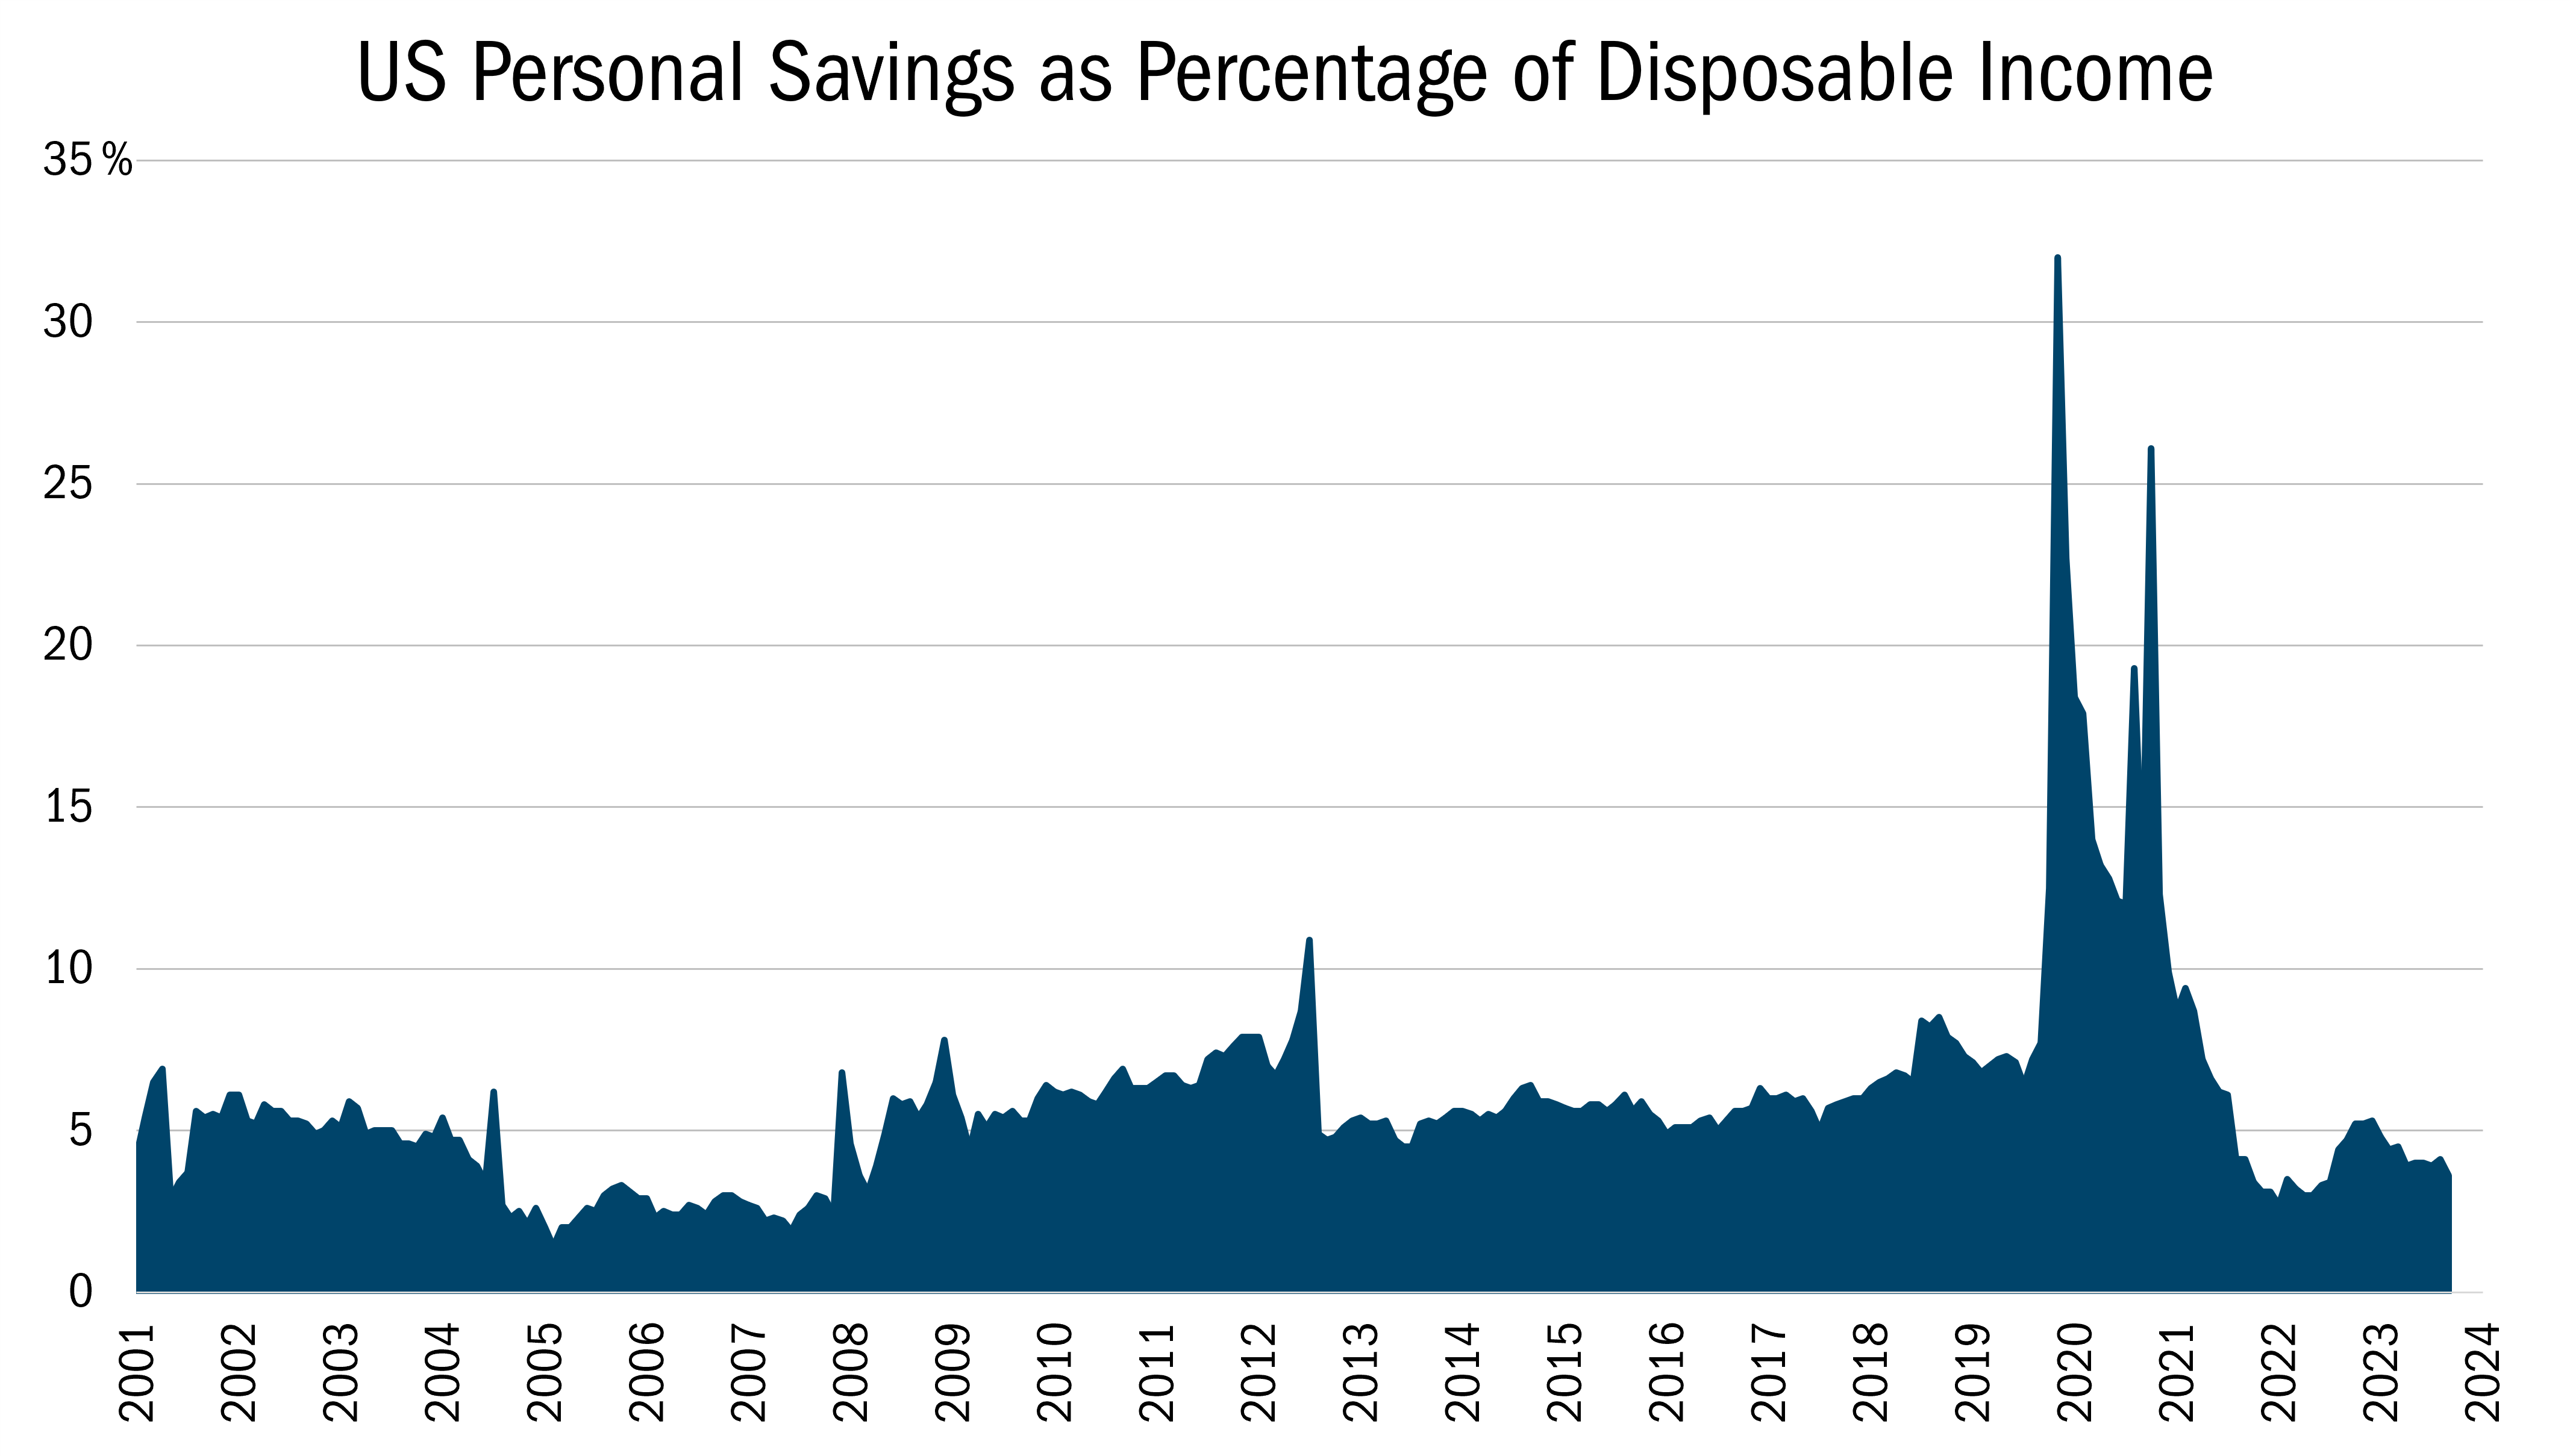 US Personal Savings